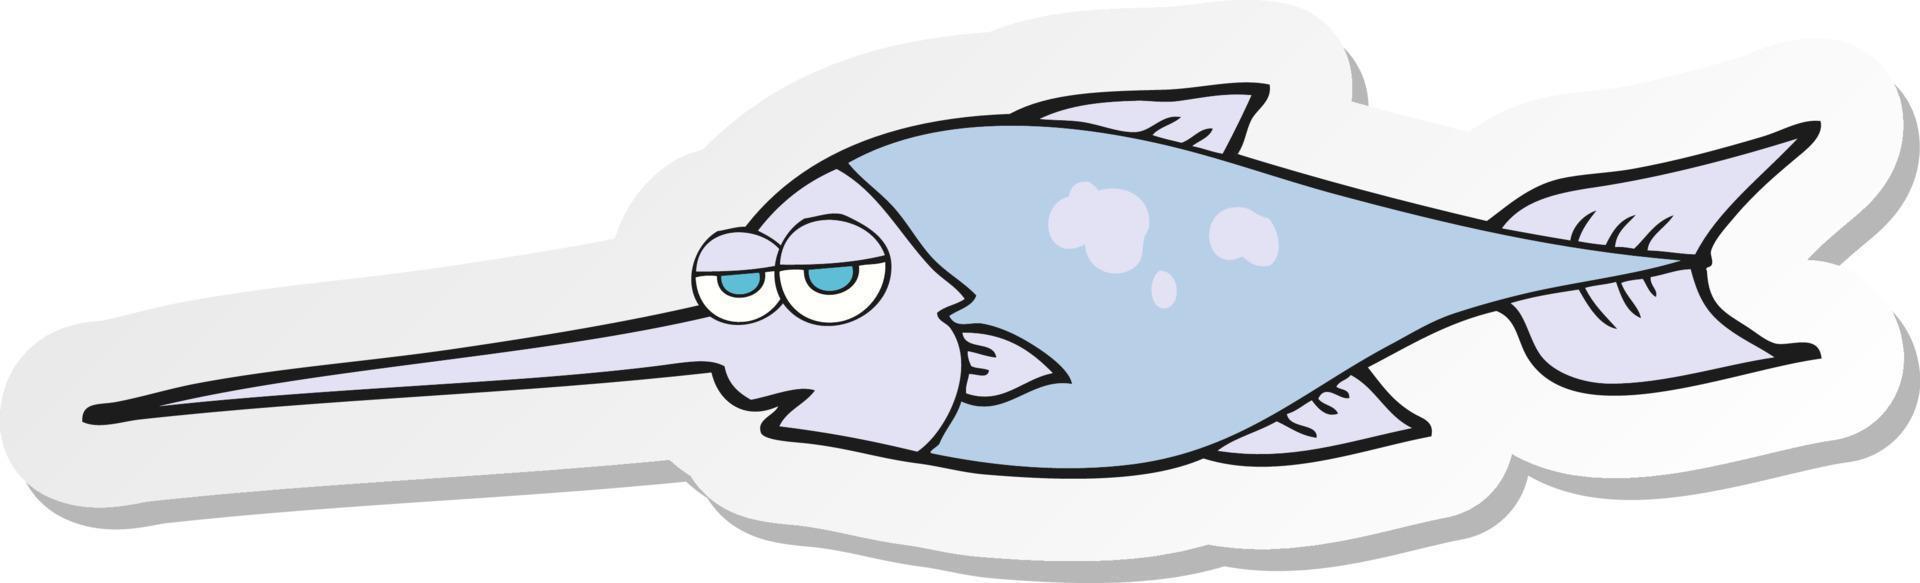 sticker of a cartoon swordfish vector